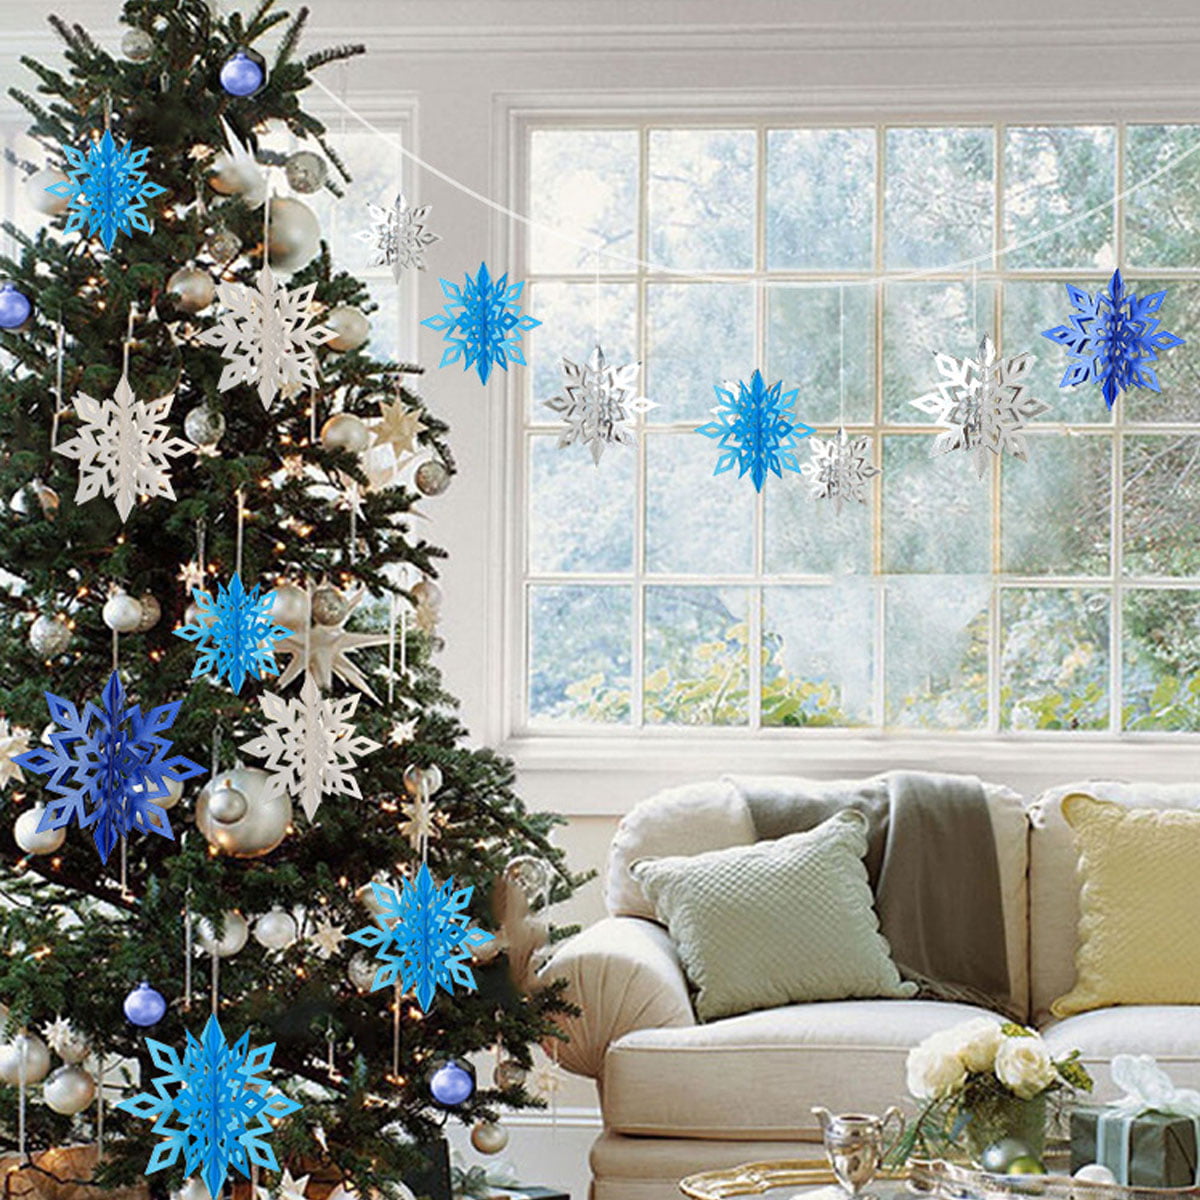 30x White Snowflake Ornaments Christmas Tree Decorations Home Festival Decor Yc 